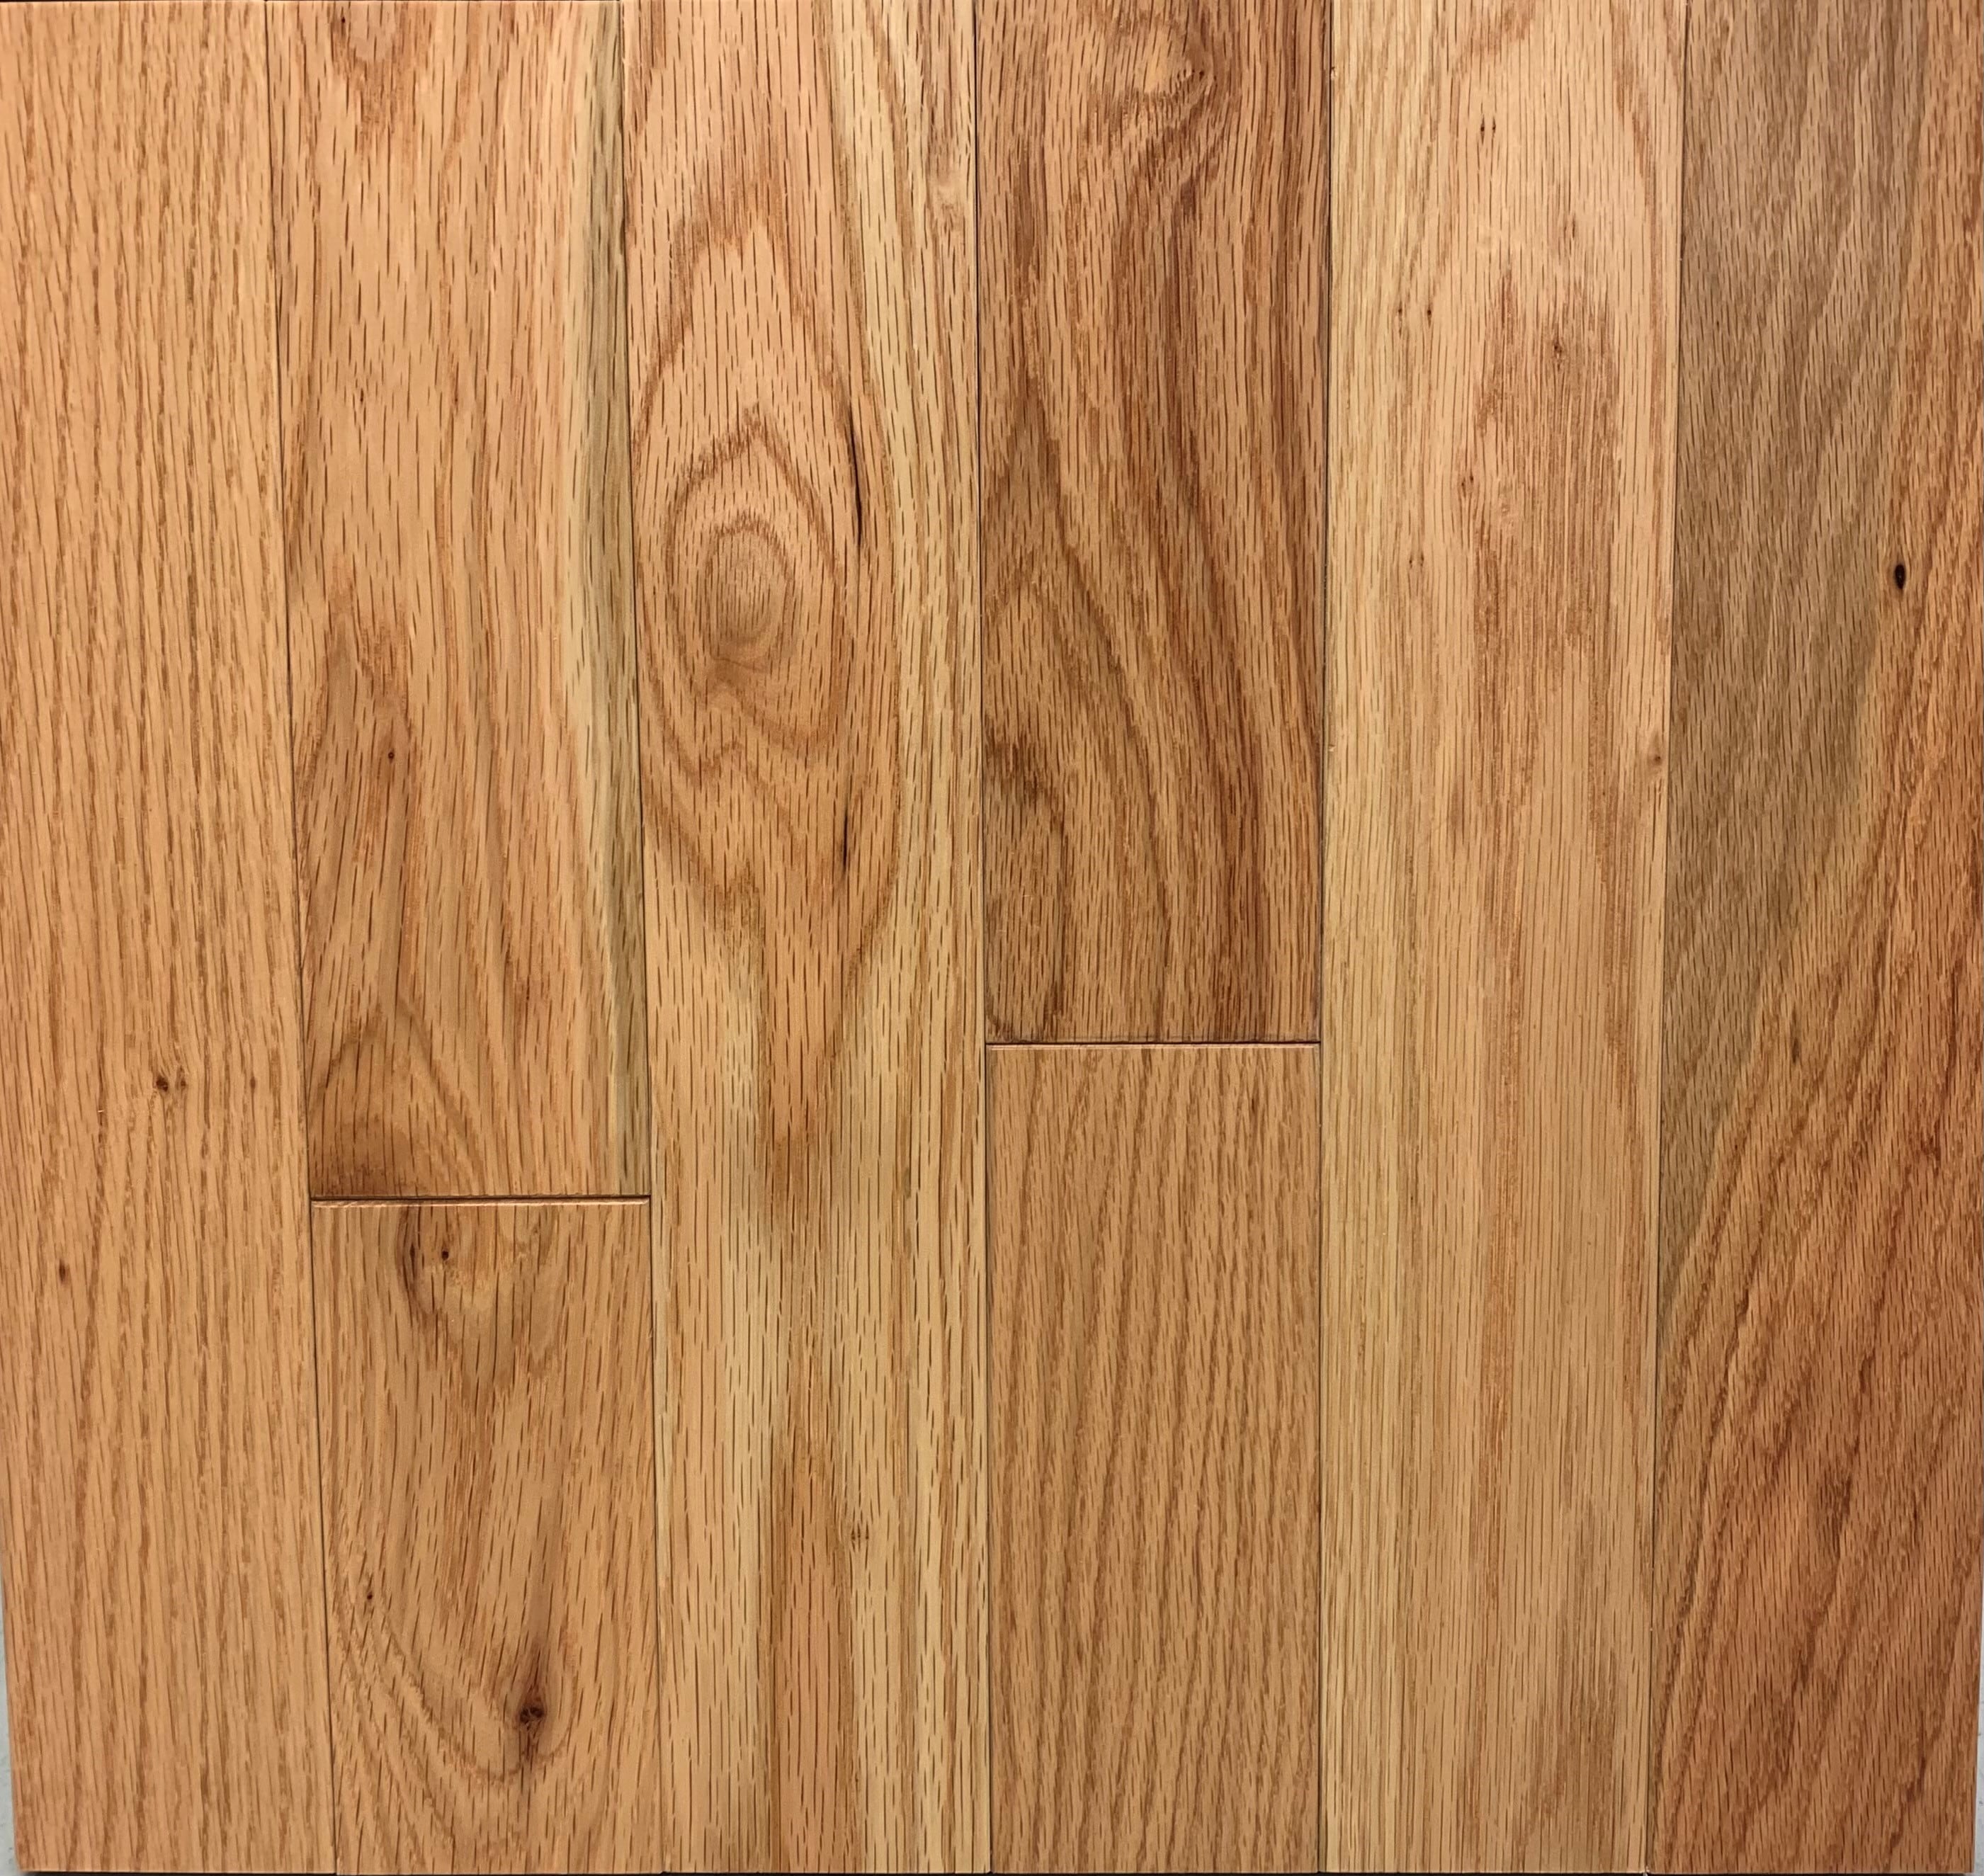 2' x 2' x 3/8 Forest Floor Wood Grain Foam Mats